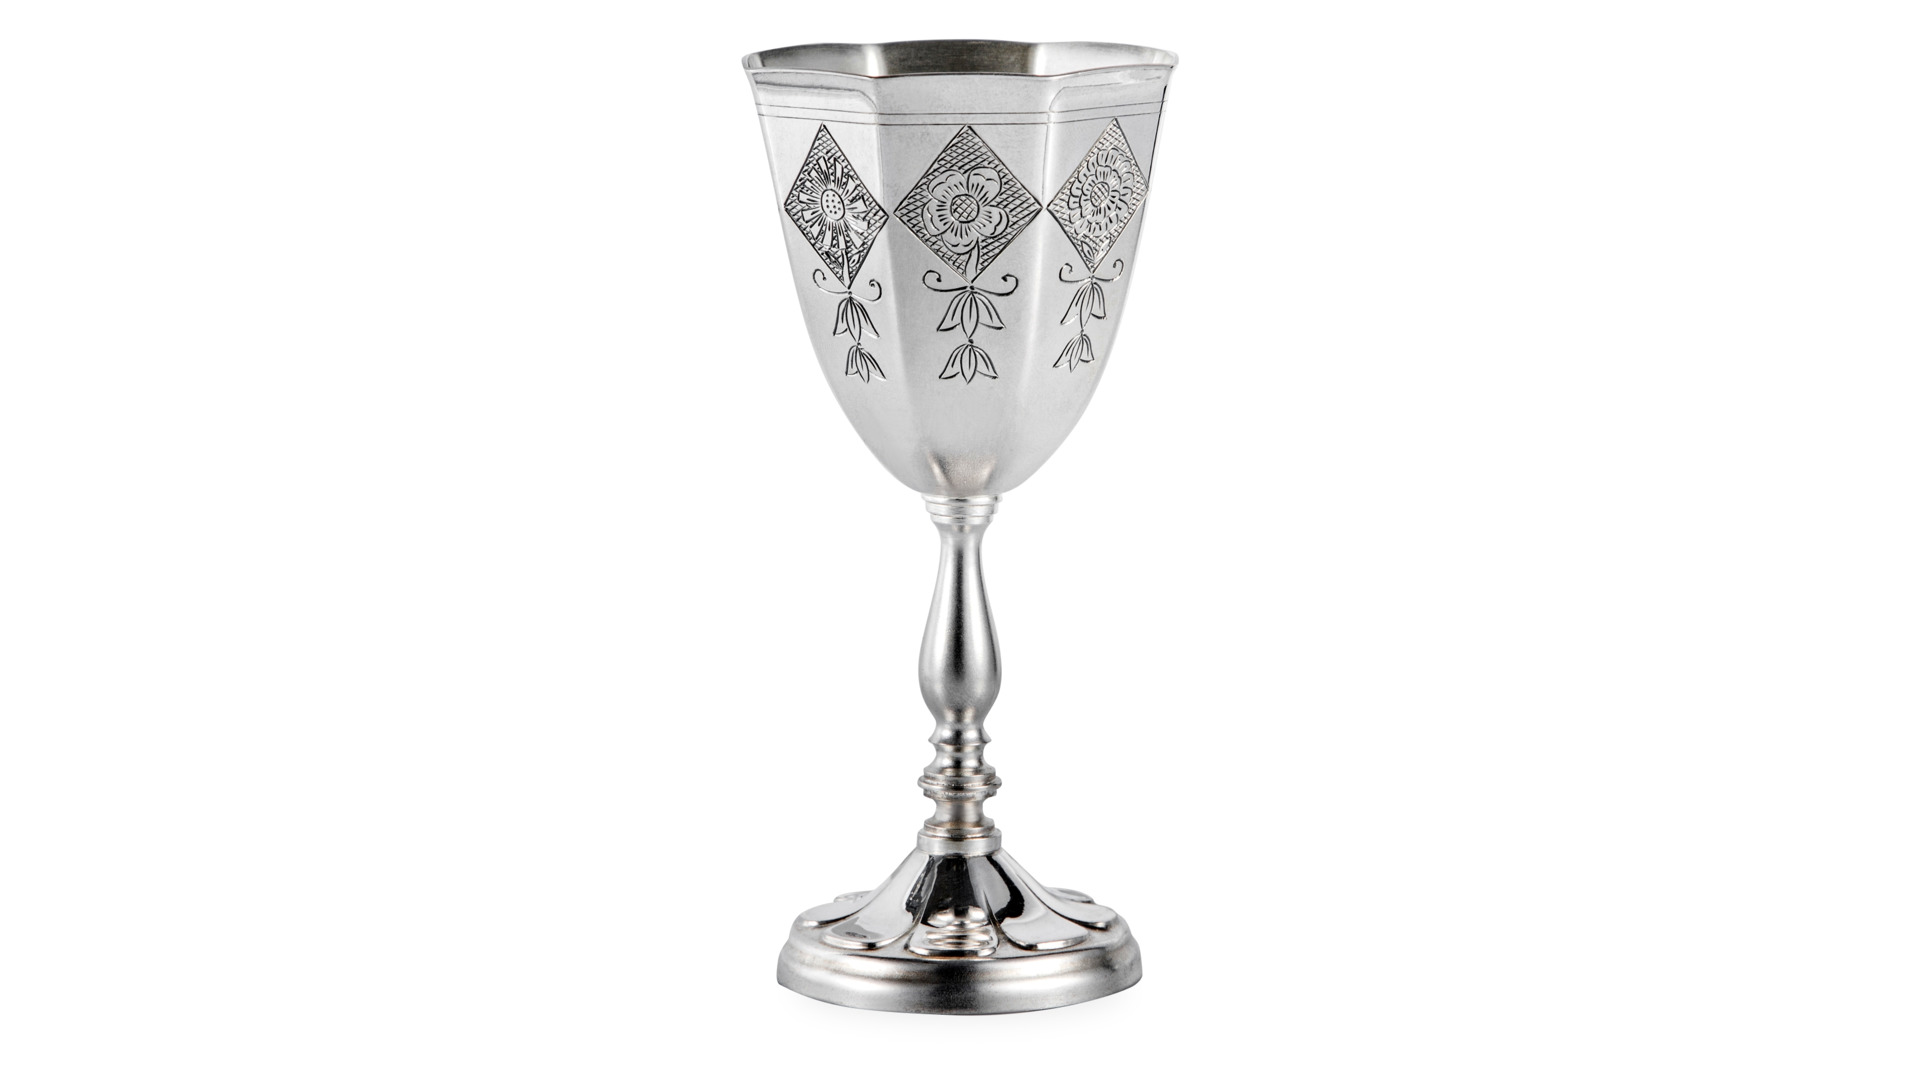 Рюмка для водки и текилы Мстерский ювелир Октава 115,5 г, серебро 925